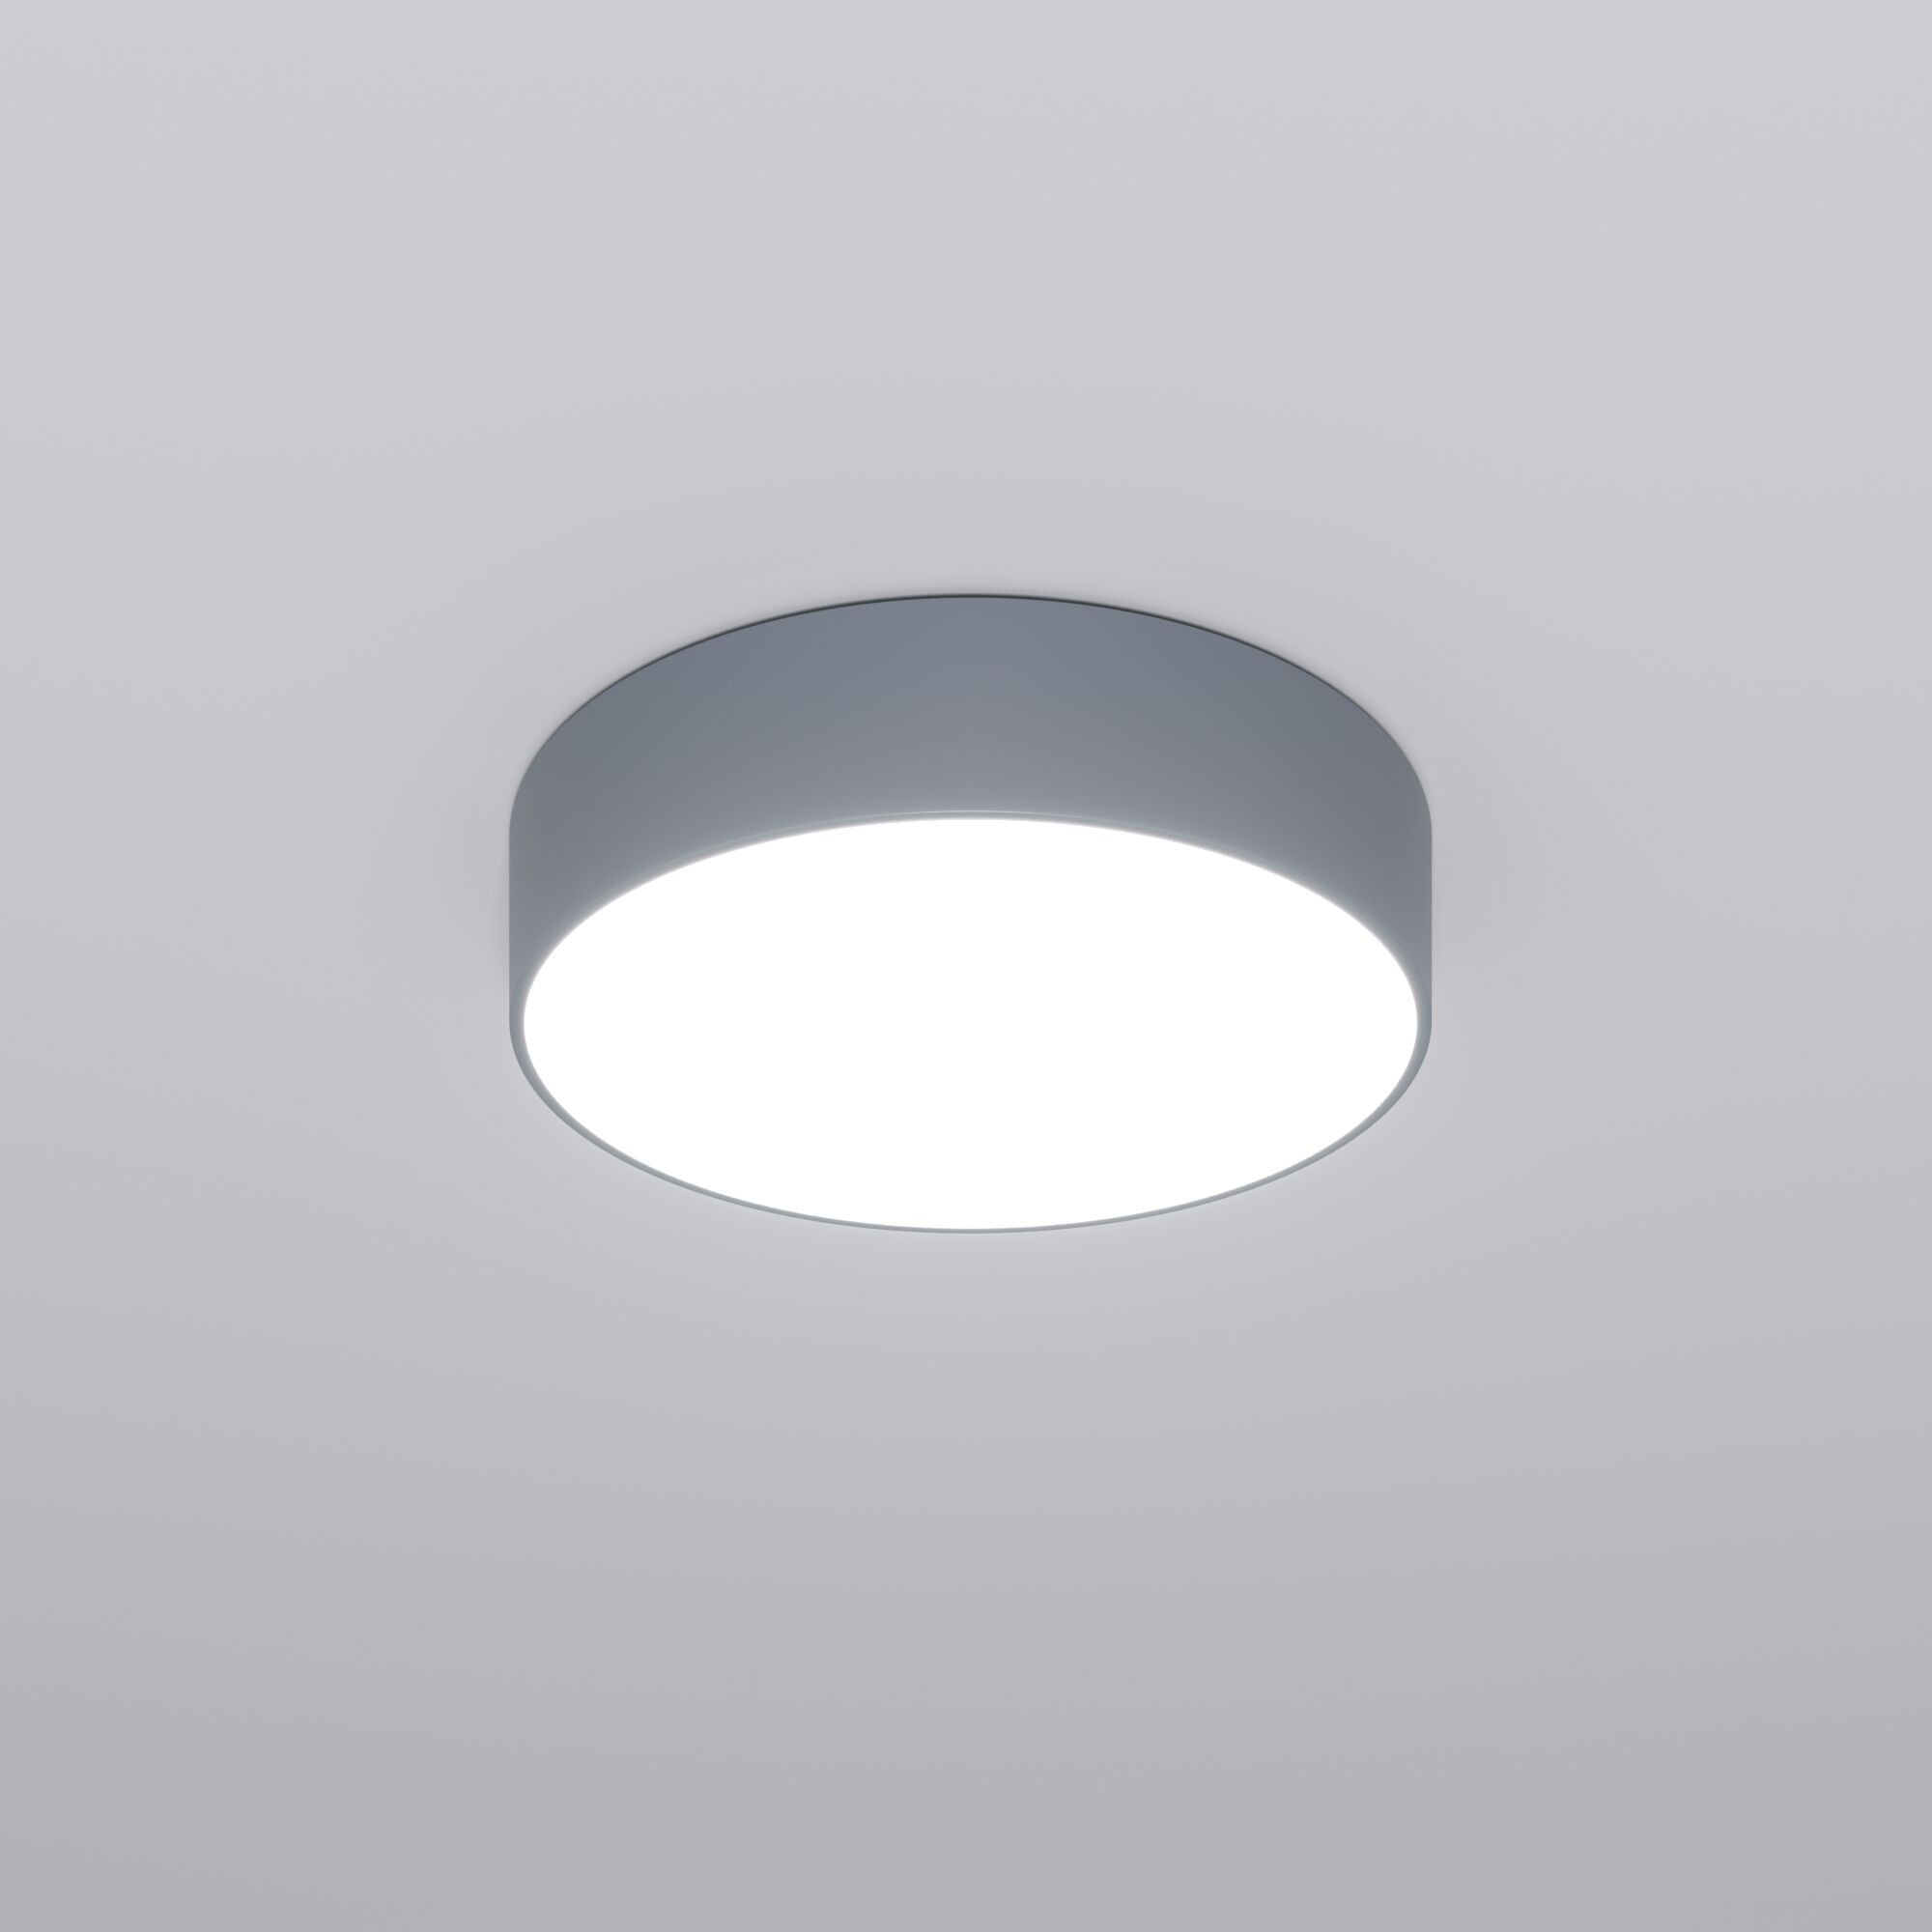 Светильник 40 см, 50W, 3300-6500K, Eurosvet Entire 90318/1, серый